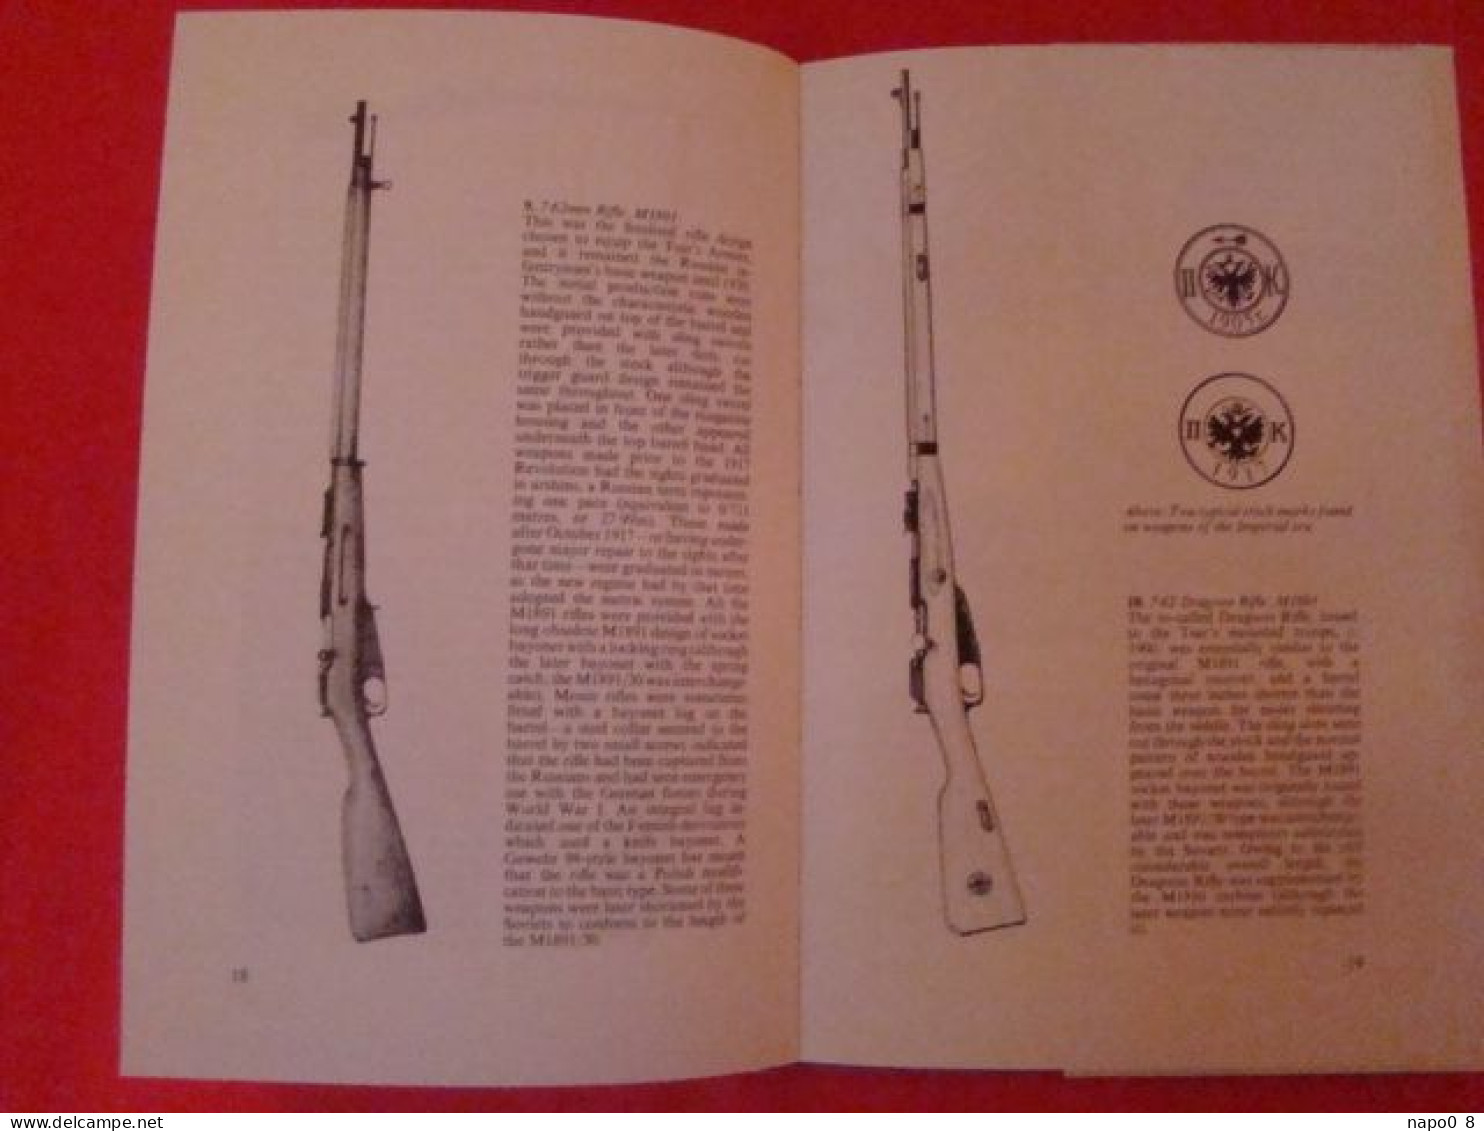 Russian Infantry Weapons Of World War 2 " AJ Barker & John Walter " - English